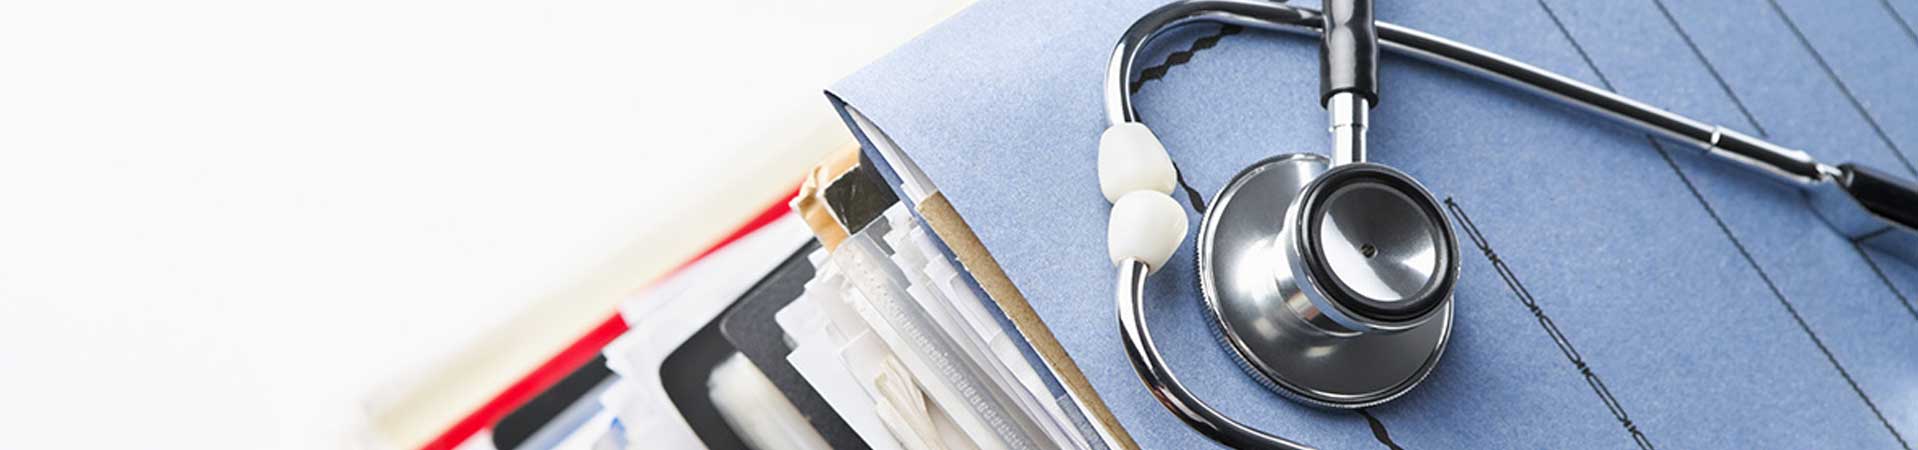 Bulk Medical Documents with Stethoscope